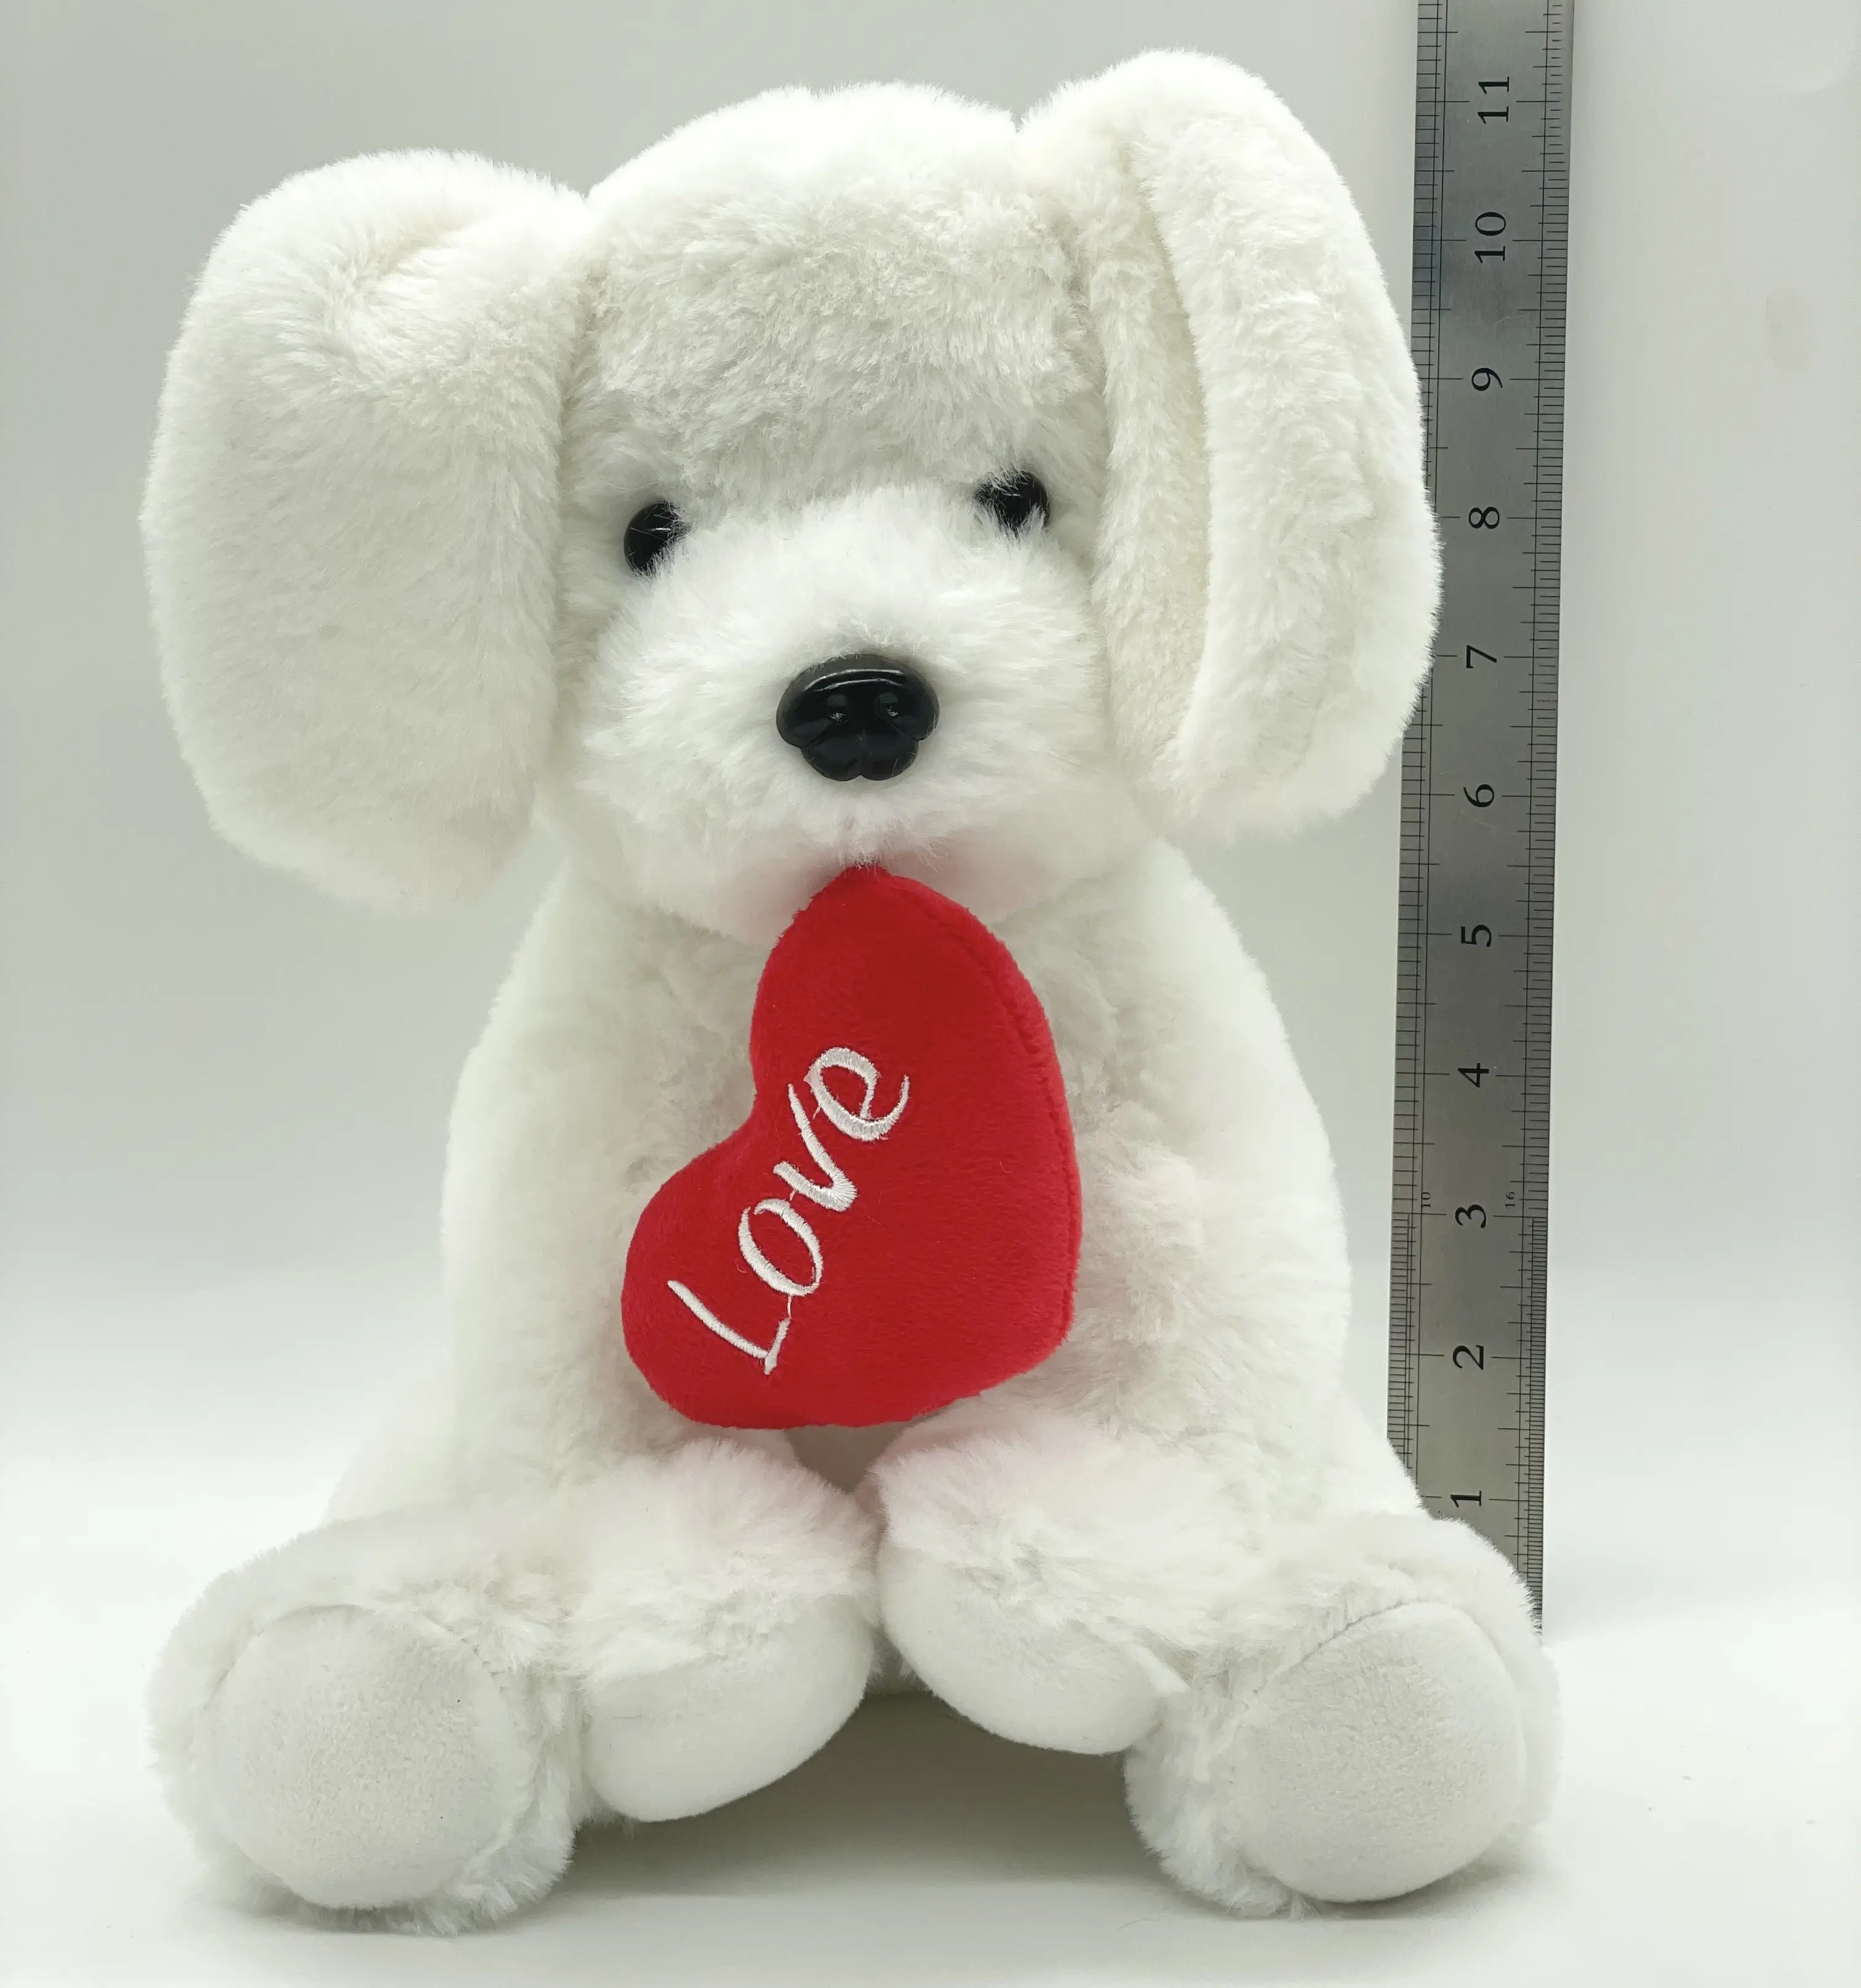 manufacture new stuffed Animal Valentine's Gift Teddy Bear Plush Toy Scarf Bear Doll Custom stuffed Teddy Bear Christmas Gift